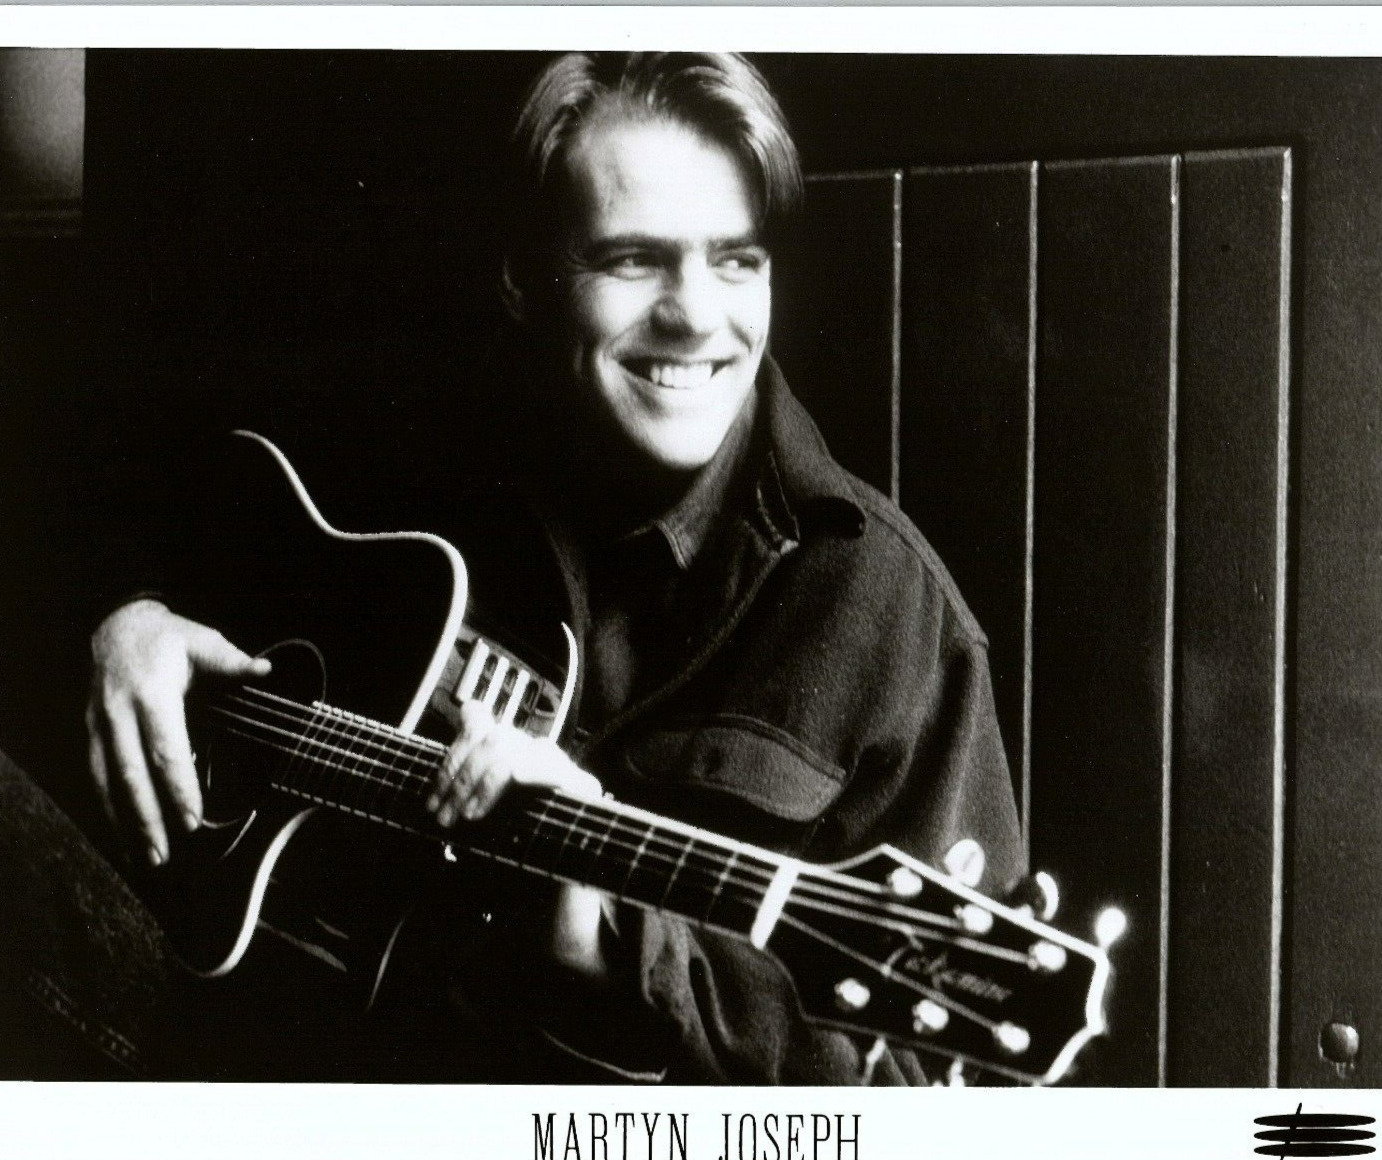 Martyn Joseph Music Press Photo 1993 Epic Records Sony Music  8 x 10   pp1